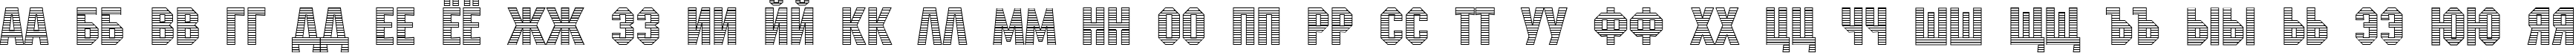 Пример написания русского алфавита шрифтом a_MachinaNovaStrMini